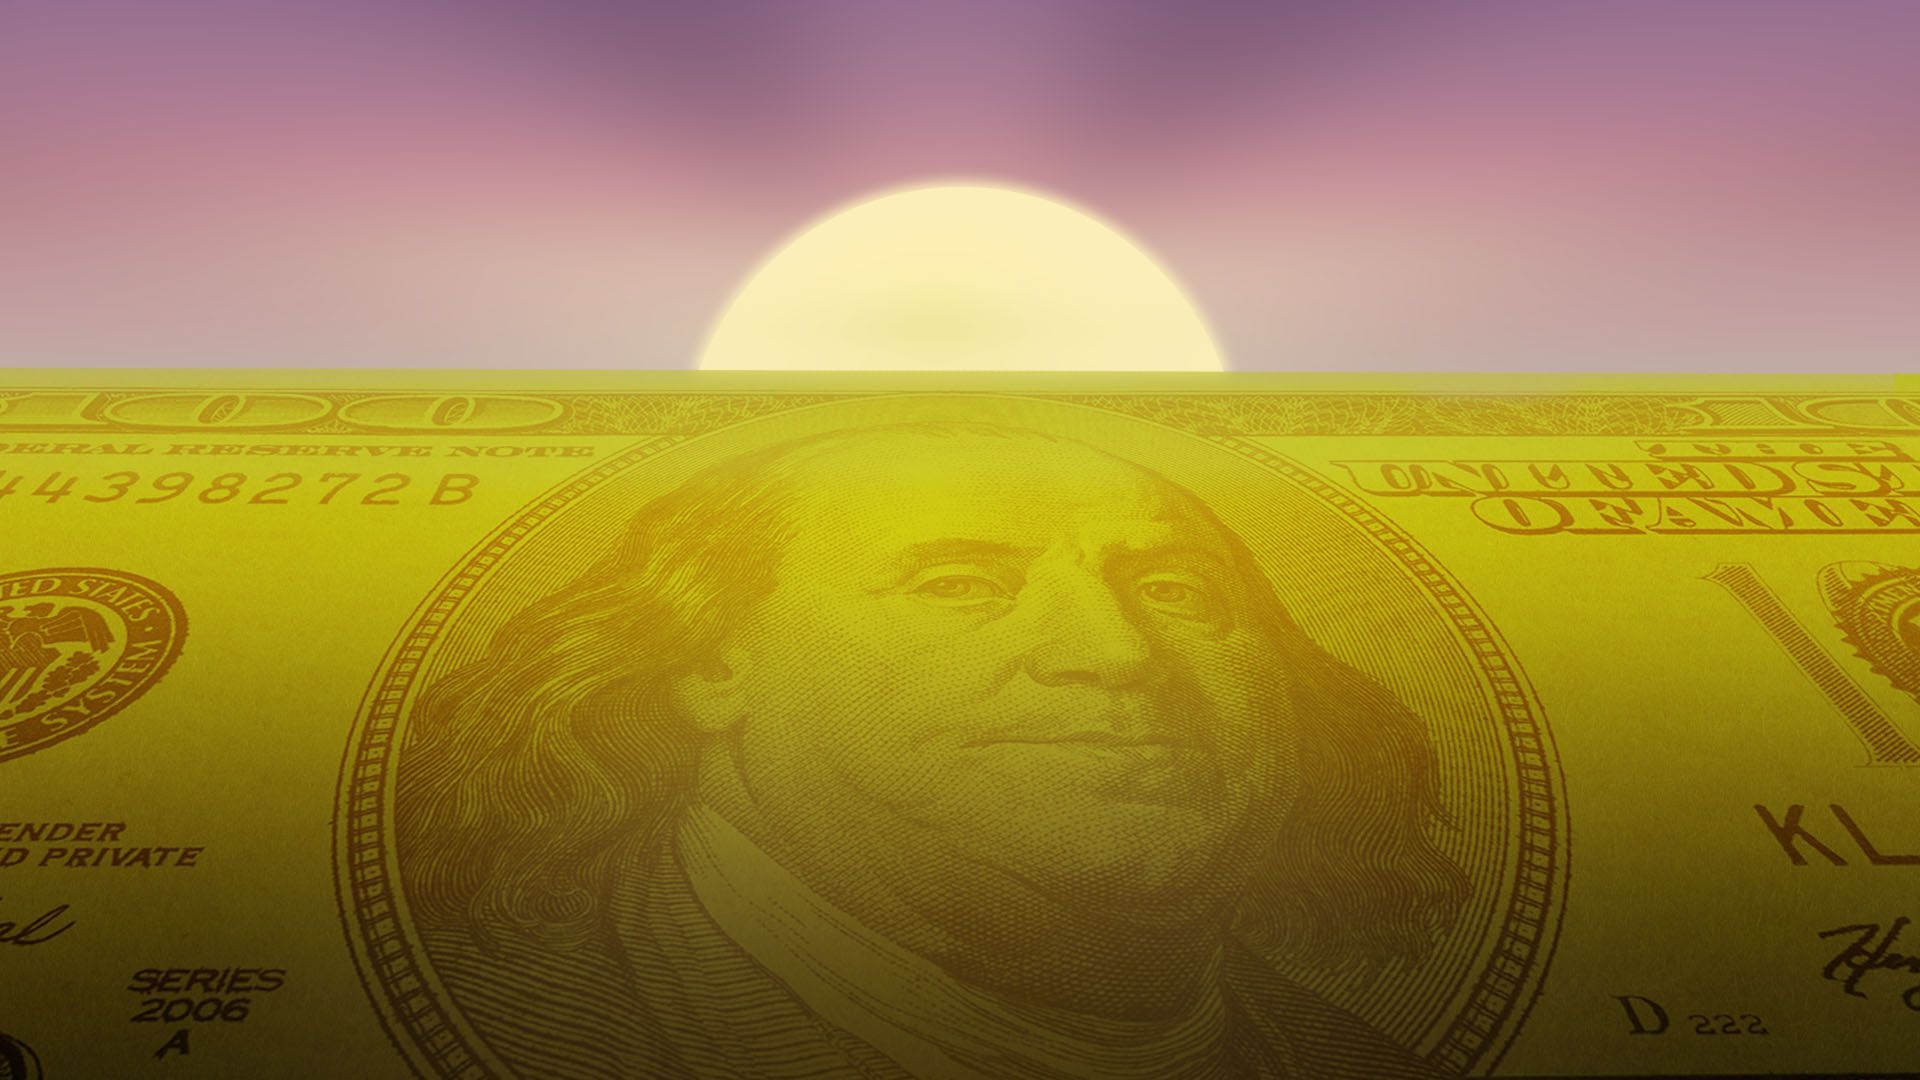 Illustration of sunset on a landscape made out of a hundred dollar bill